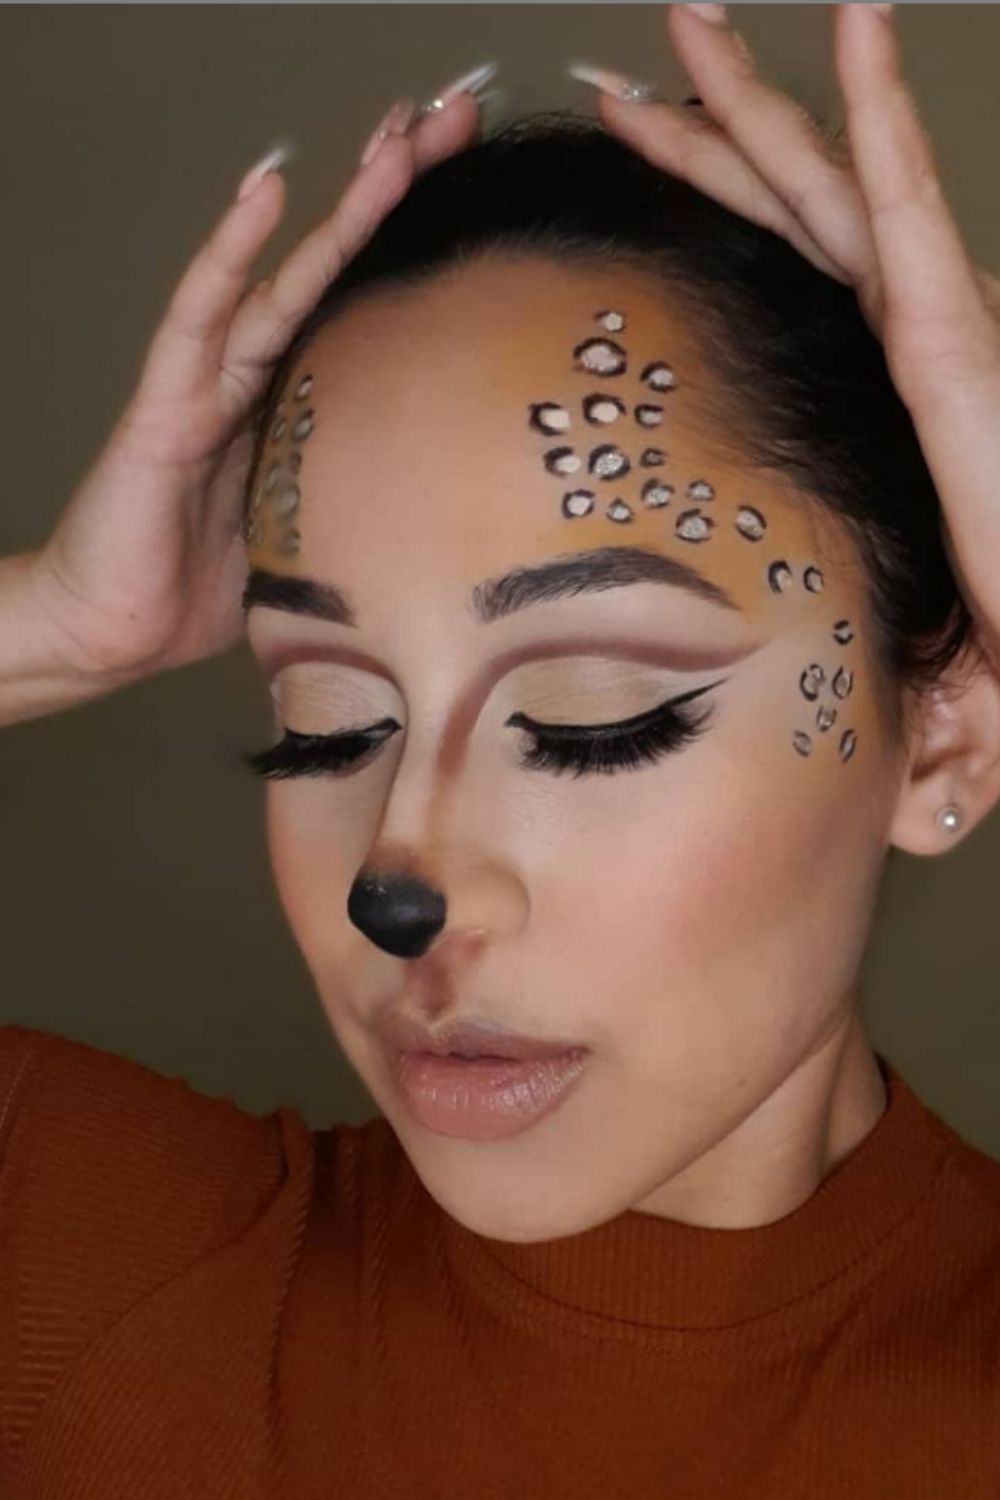 The cheetah makeup look